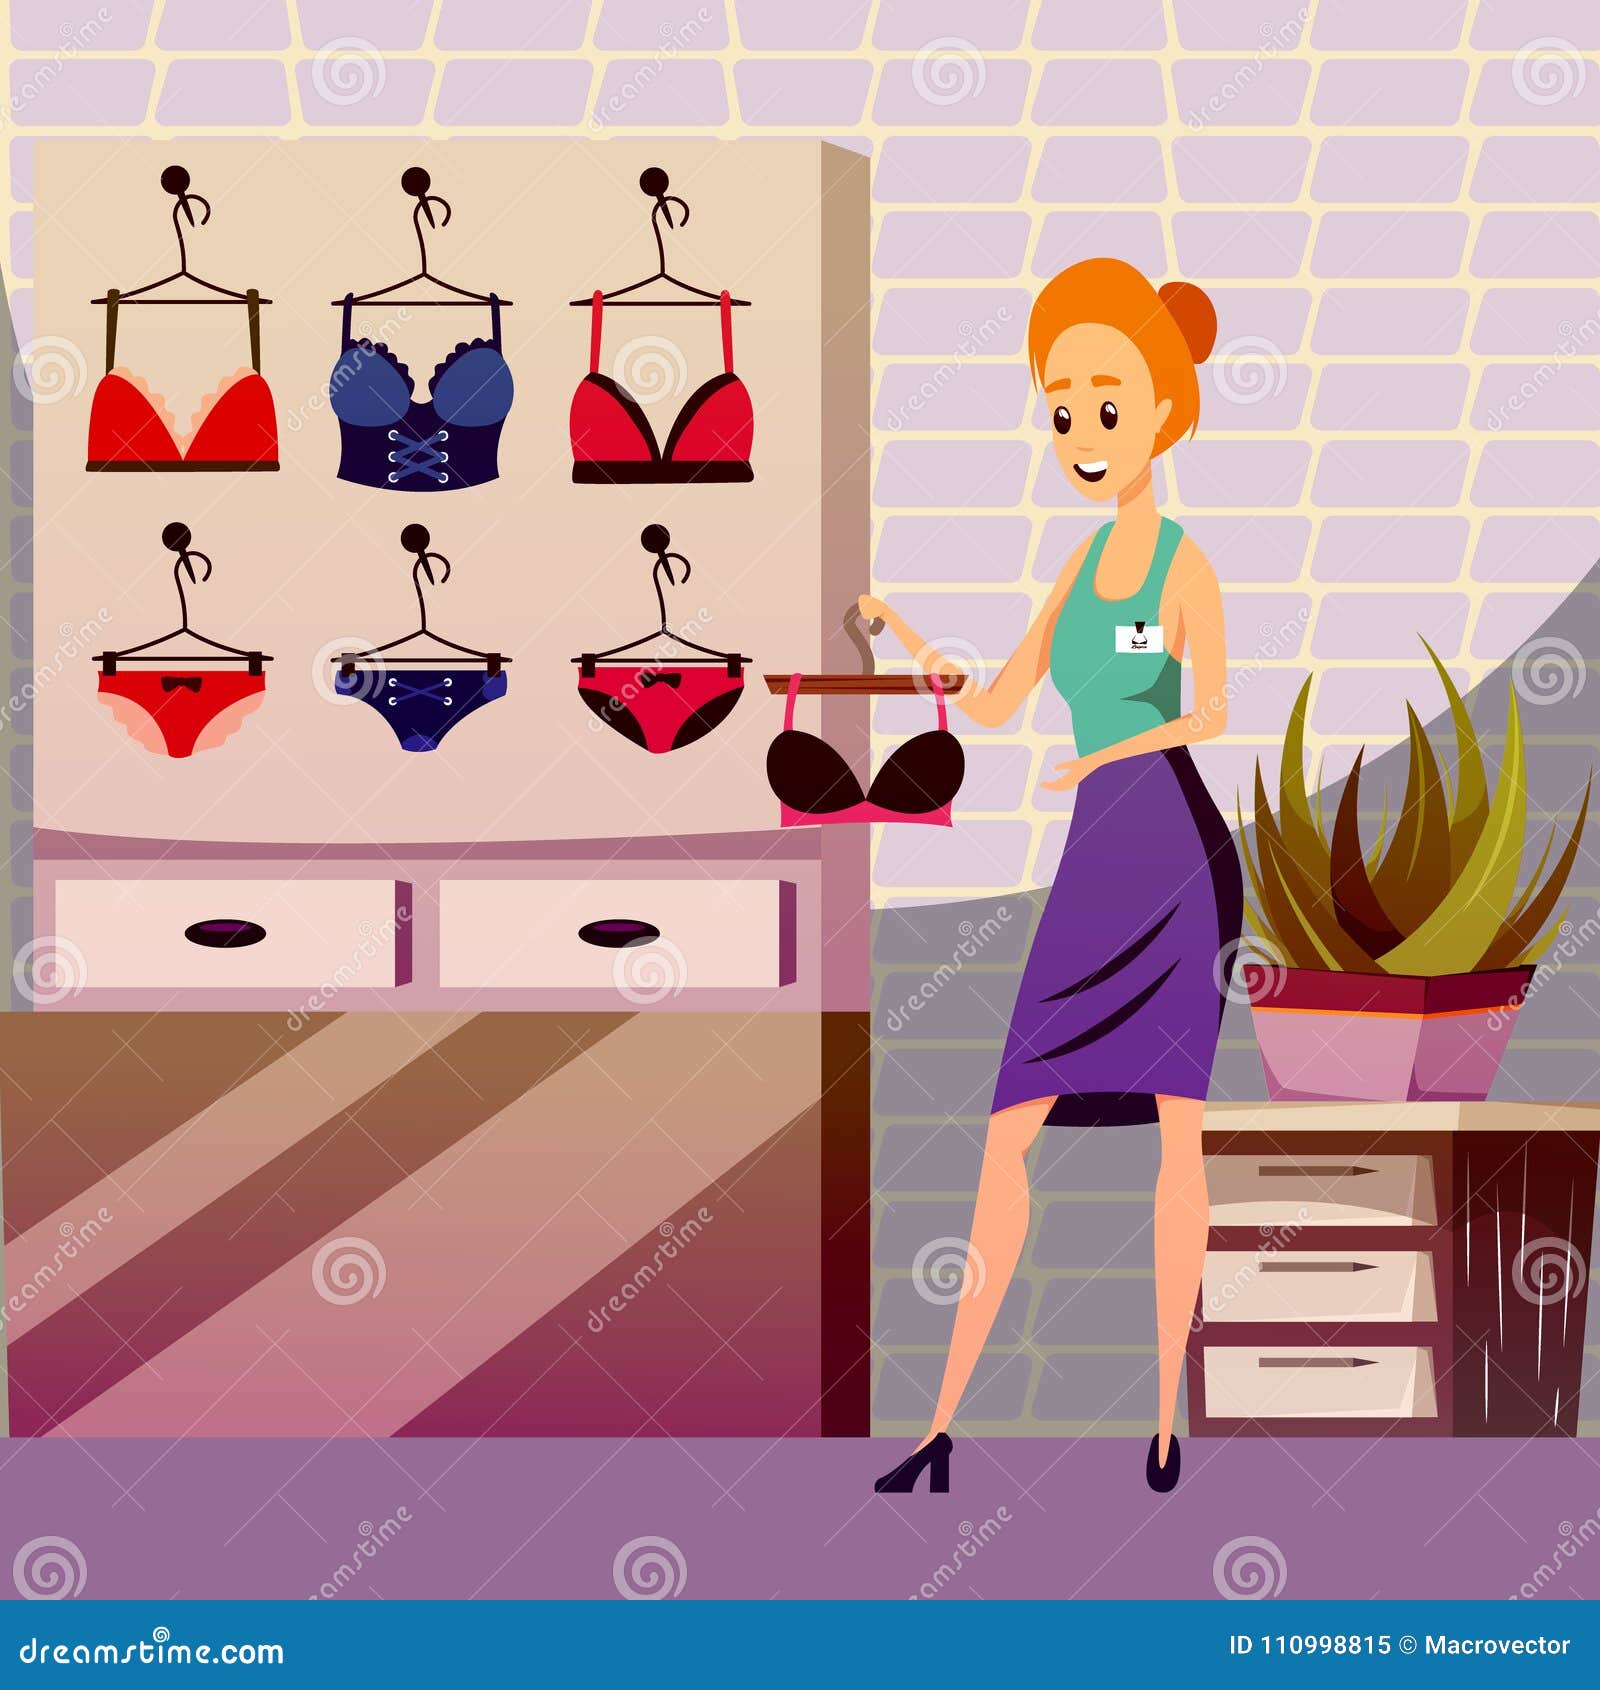 Modesty Clothing Store Background Stock Vector - Illustration of lady,  consumerism: 110998815